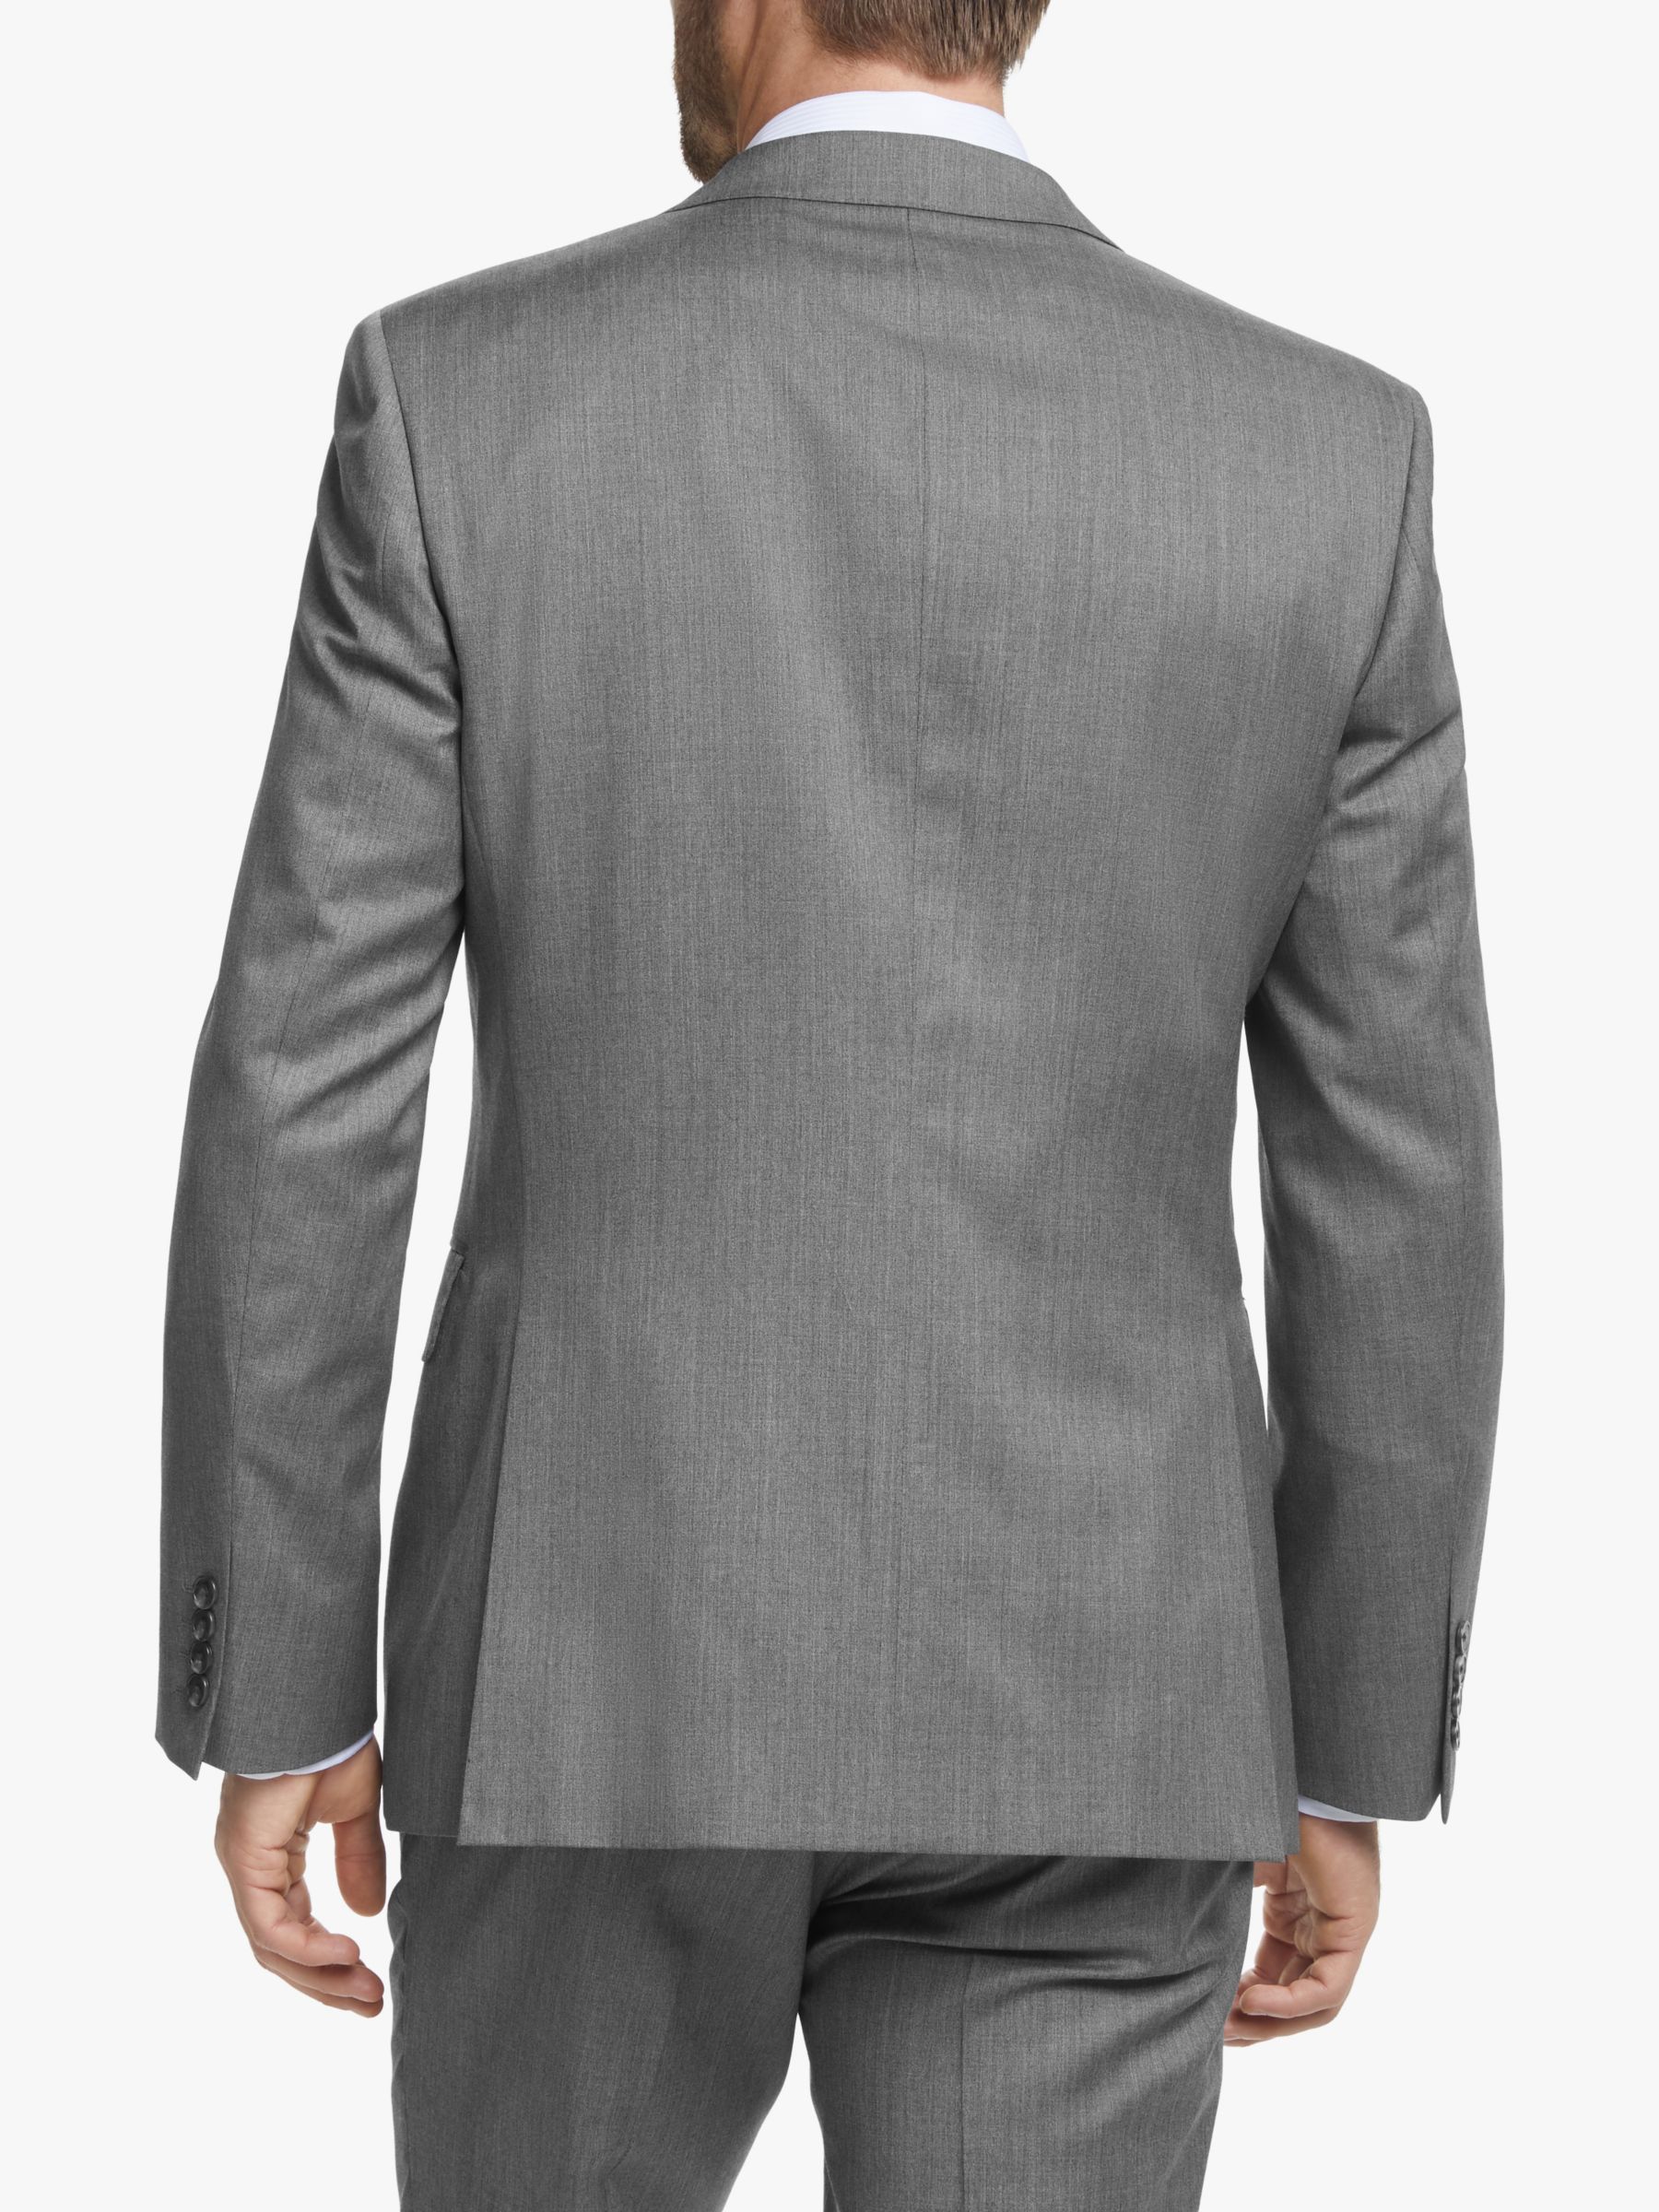 John Lewis & Partners Barberis Wool Tailored Suit Jacket, Light Grey